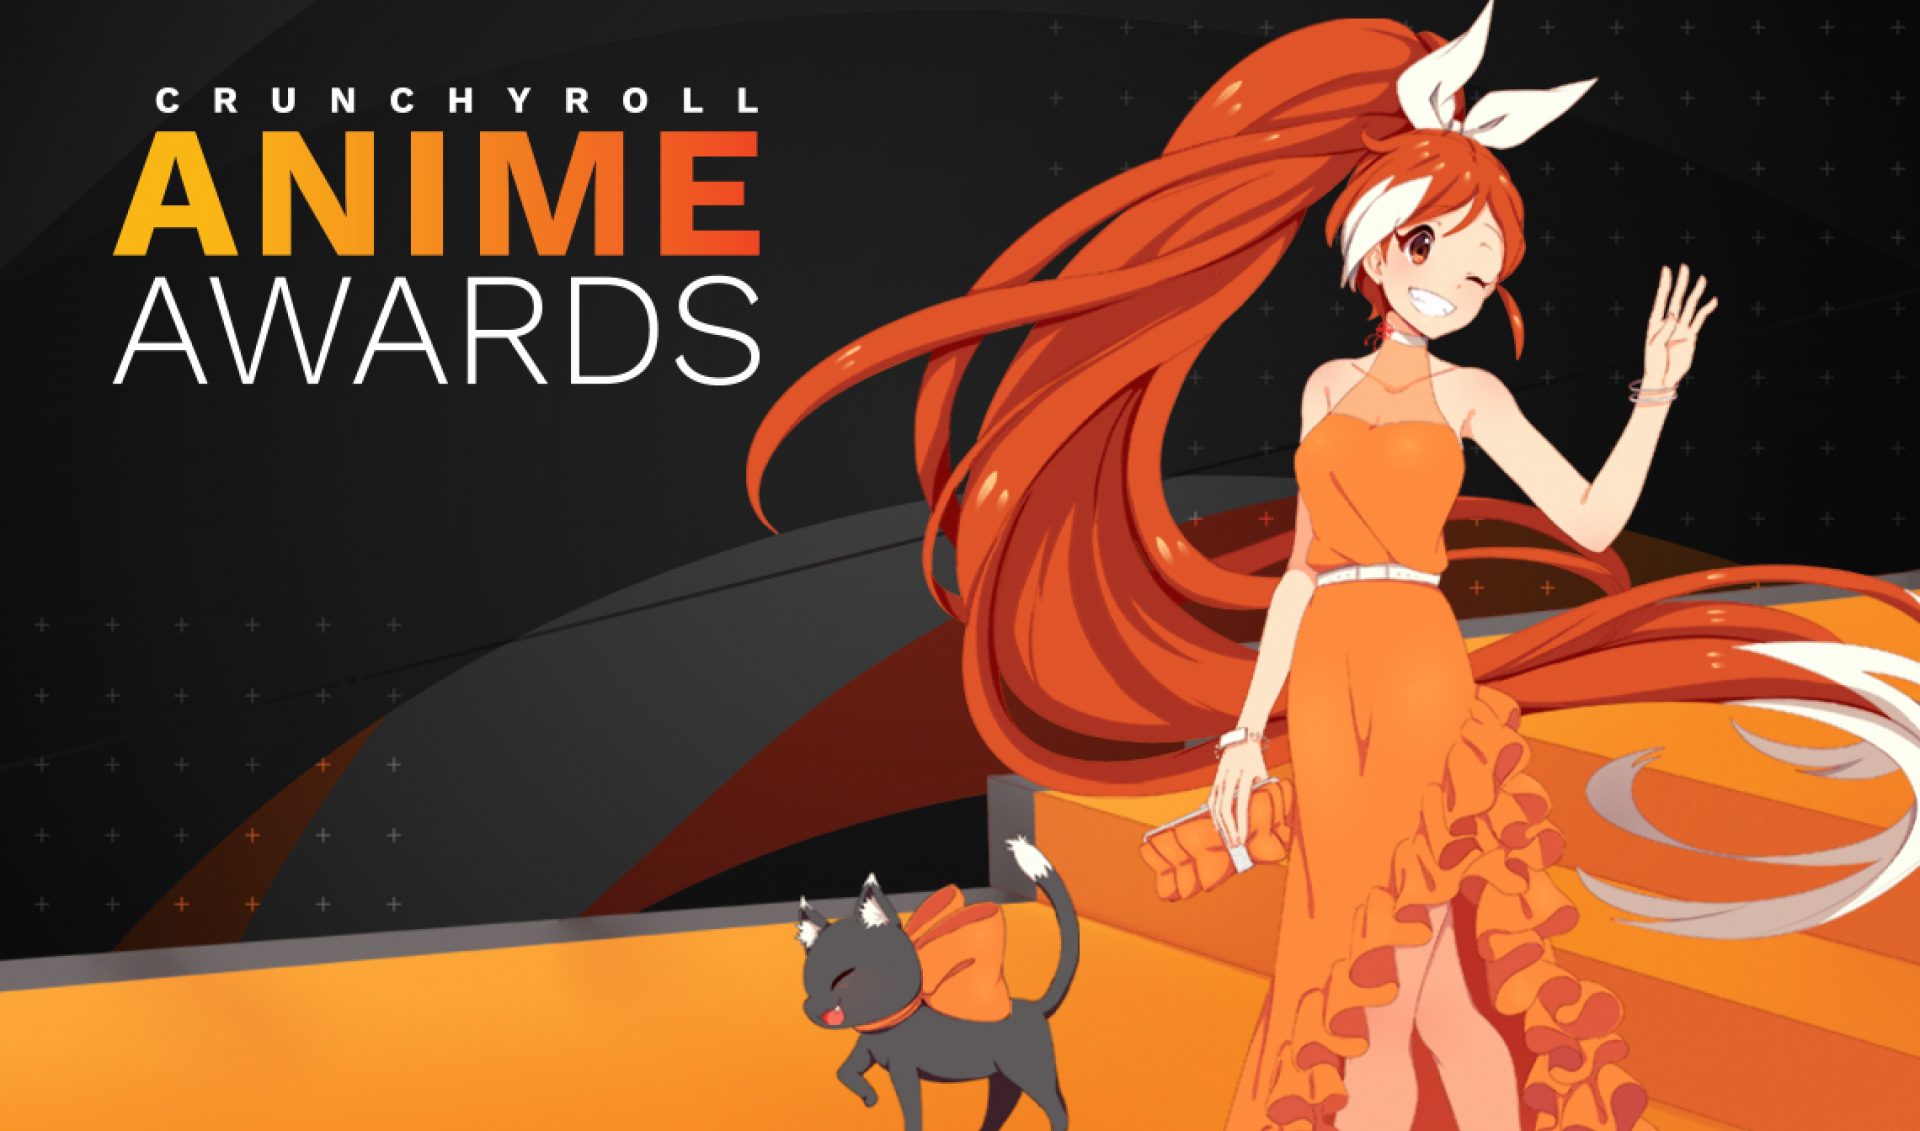 Crunchyroll Anime Awards Will Stream Live On Twitch February 24